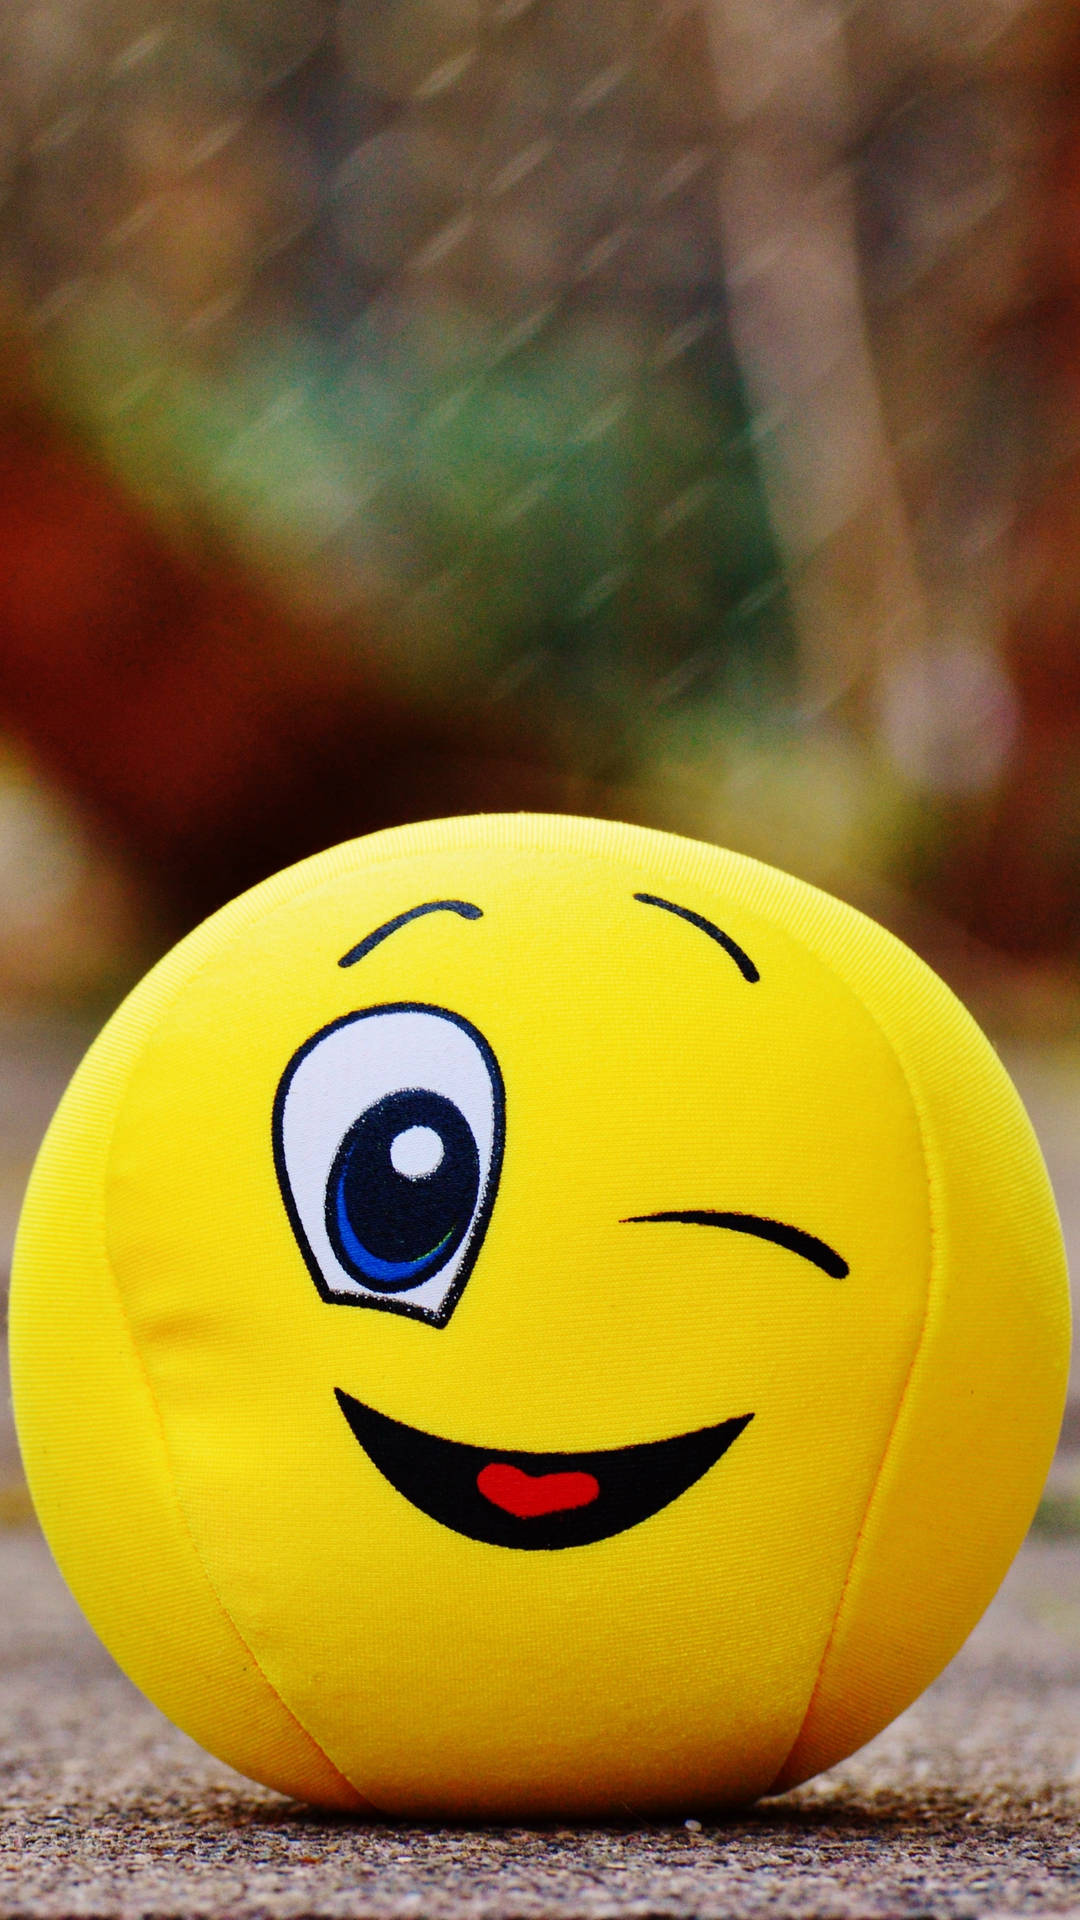 Winking Smiley Face Ball Cushion Wallpaper